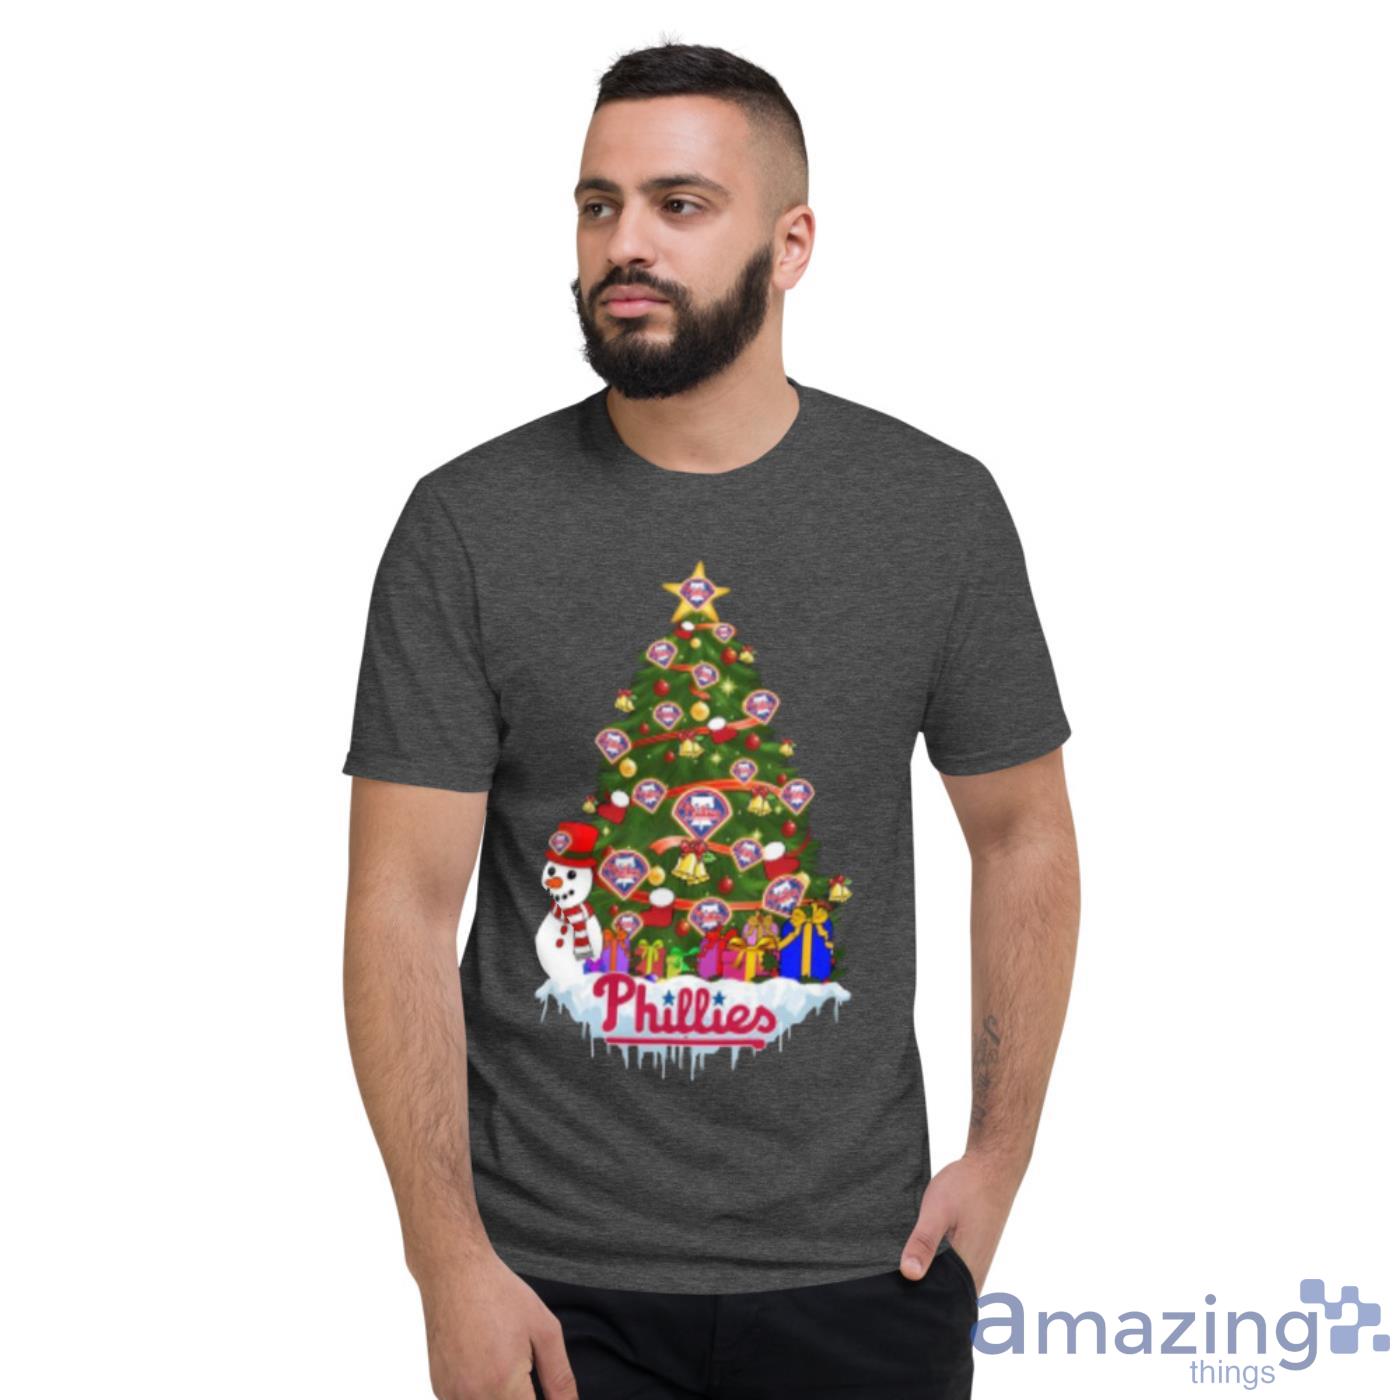 TheHappyFoxTees Phillies Shirt Ring The Bell Womens Mens Philadelphia Baseball Philly T-Shirt Gift Women Men Phanatic Christmas Gift Sweat Shirts Cotton Tee